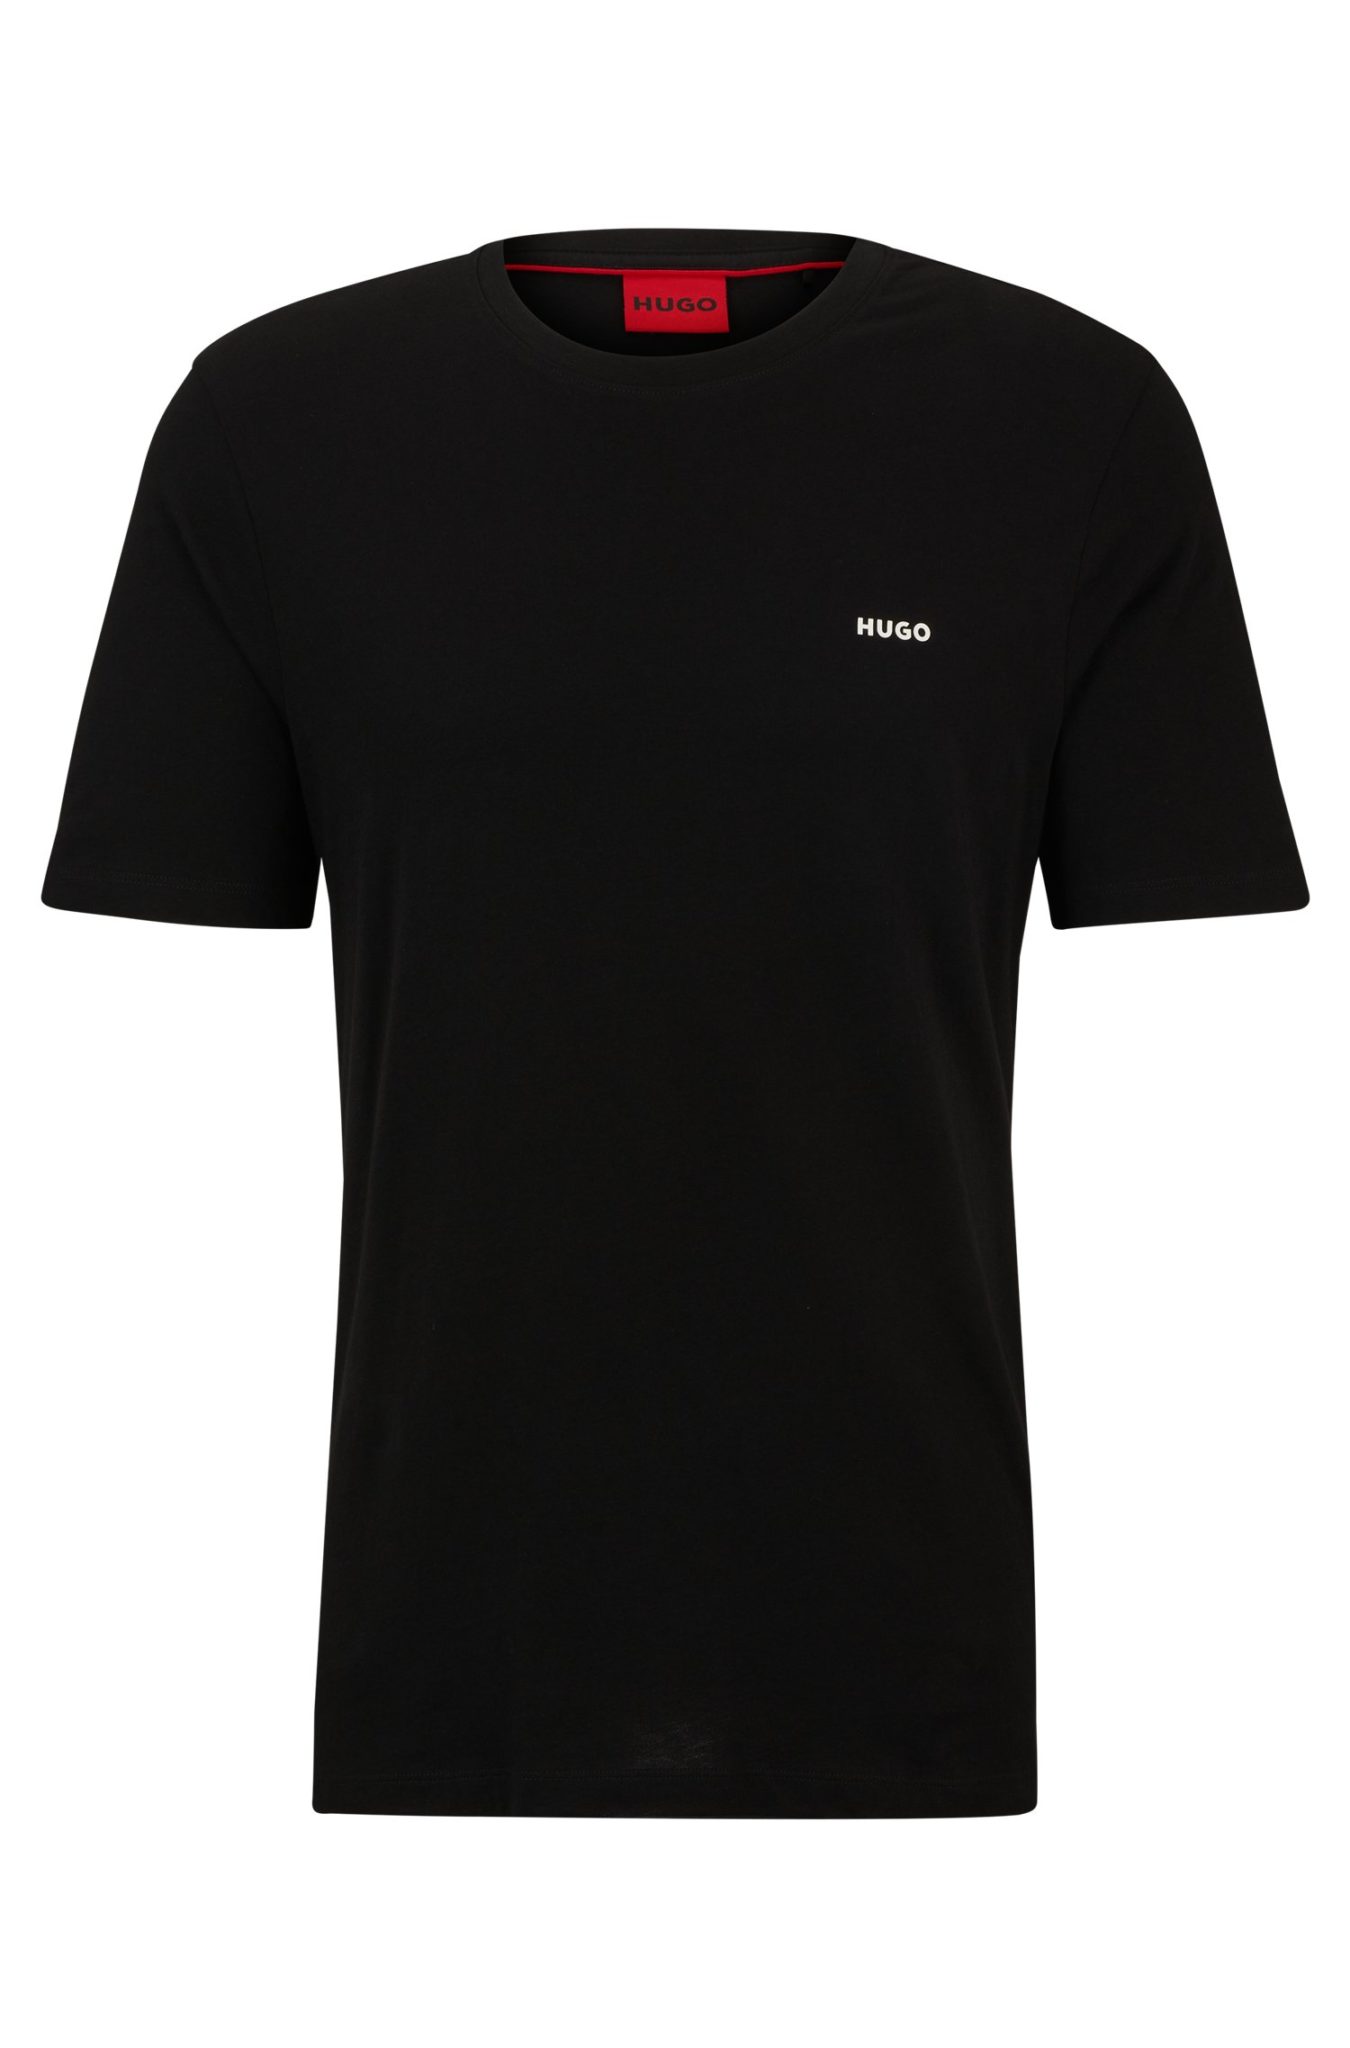 Hugo Boss T-shirt en jersey de coton avec logo imprimé